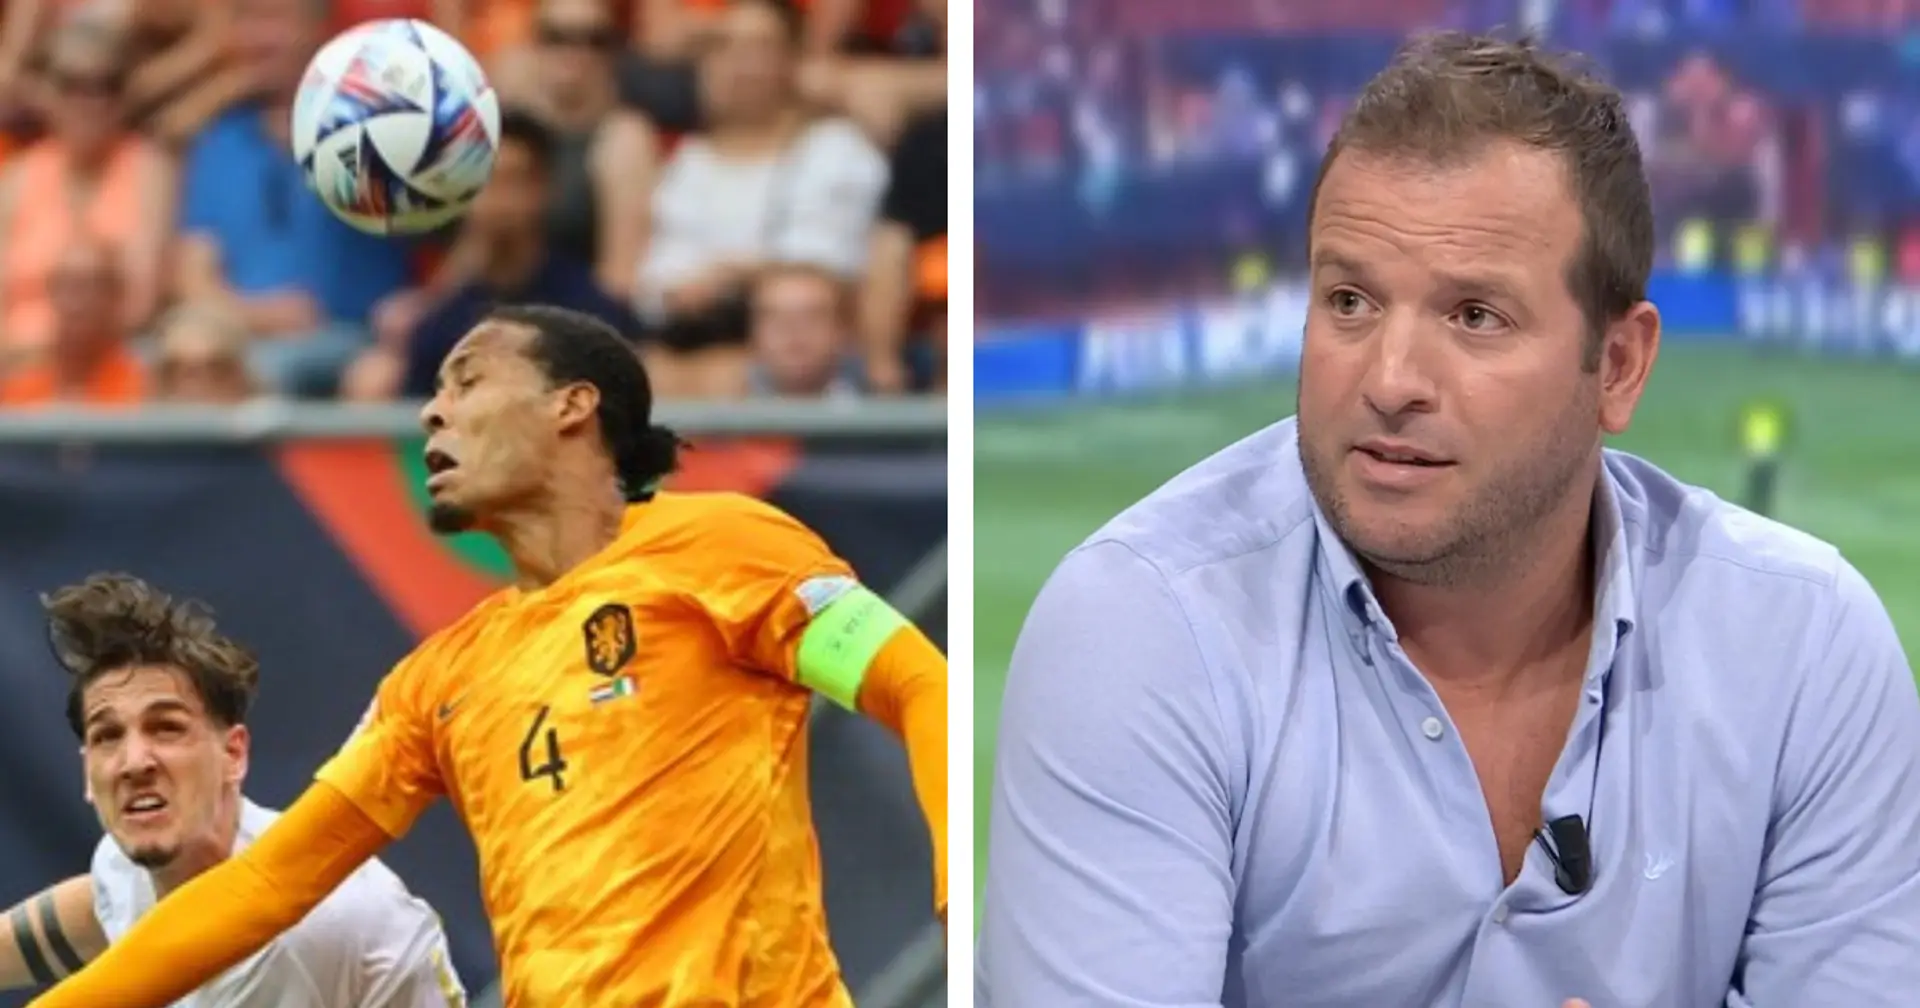 'Basically doing nothing': Van der Vaart slams Virgil van Dijk after Nations League defeat